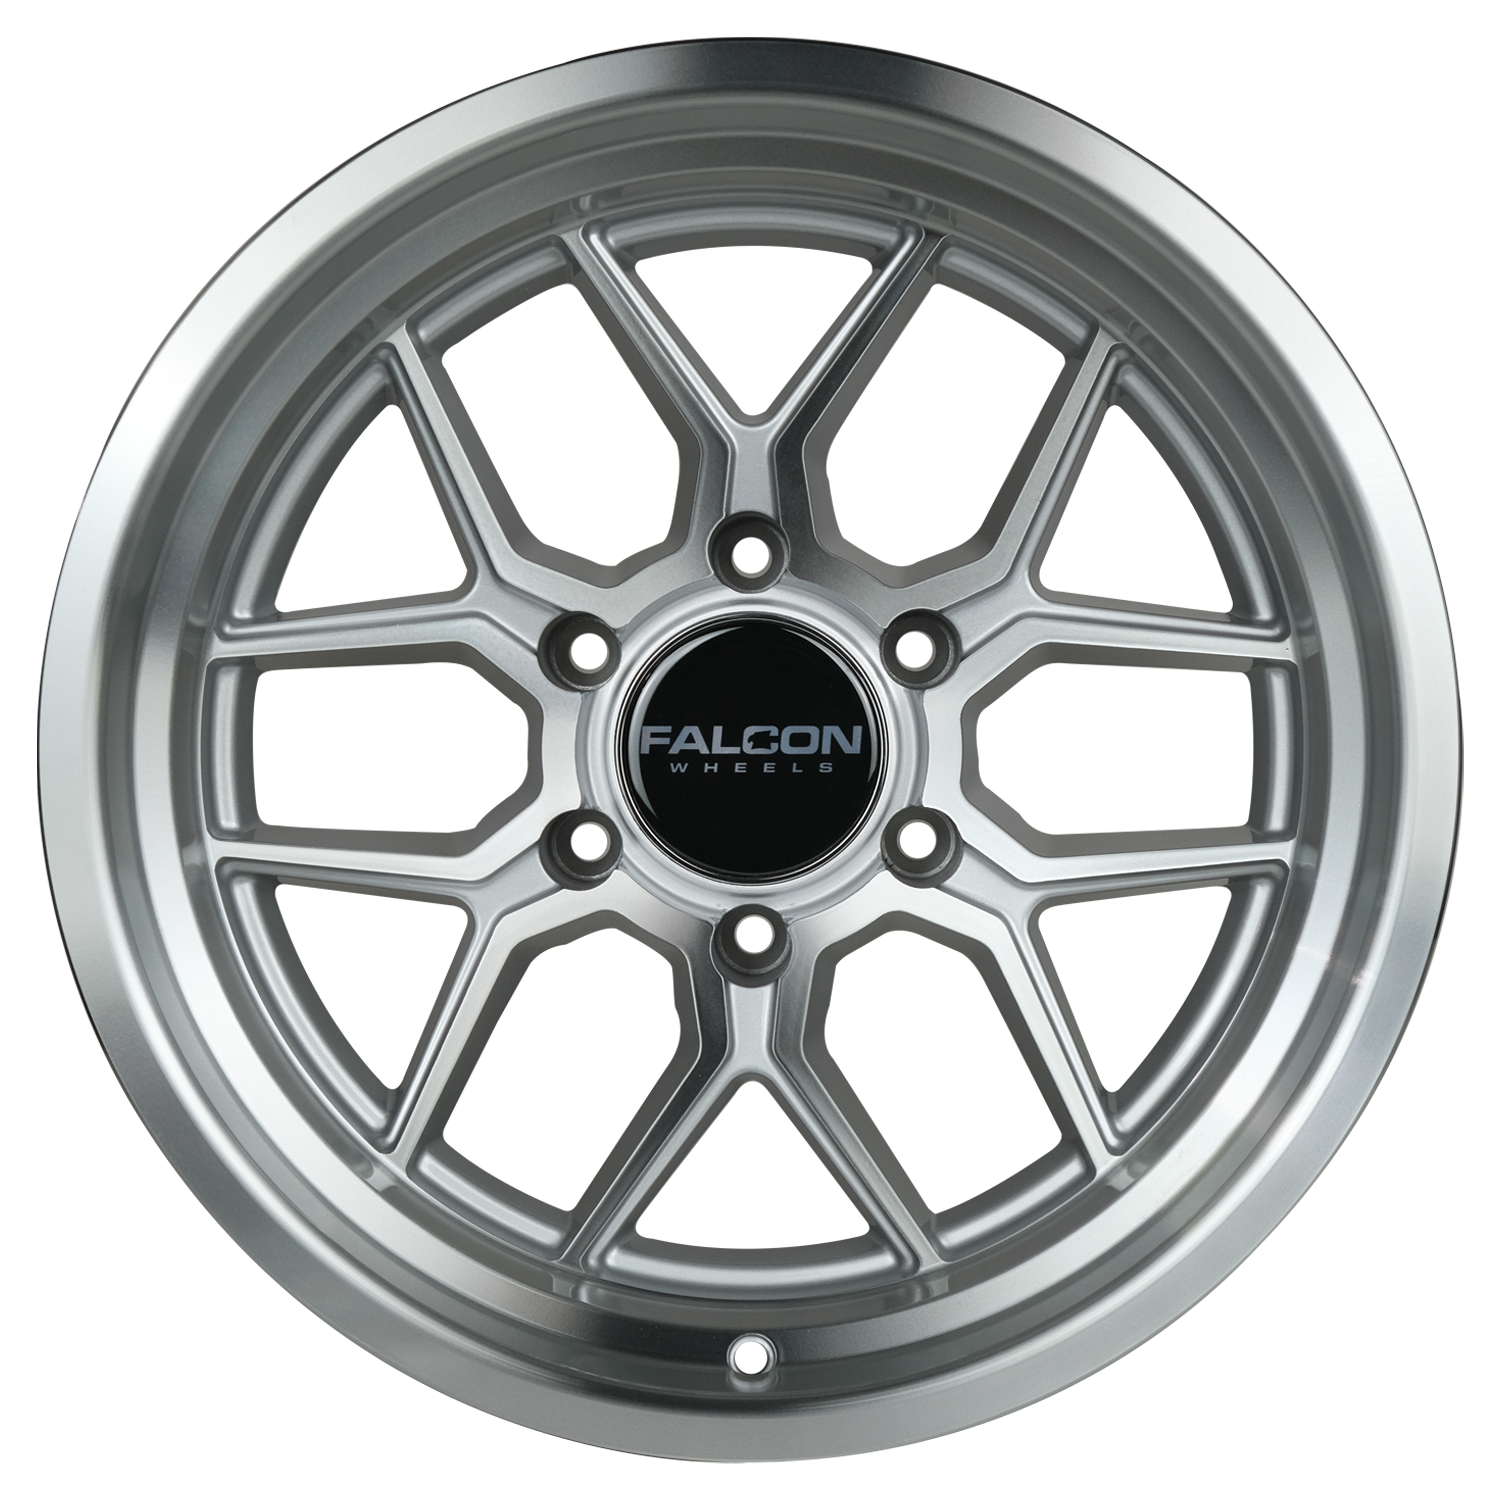 TX1 - Apollo Silver w/Machine Face & Lip - Premium Wheels from Falcon Off-Road Wheels - Just $310! Shop now at Falcon Off-Road Wheels 